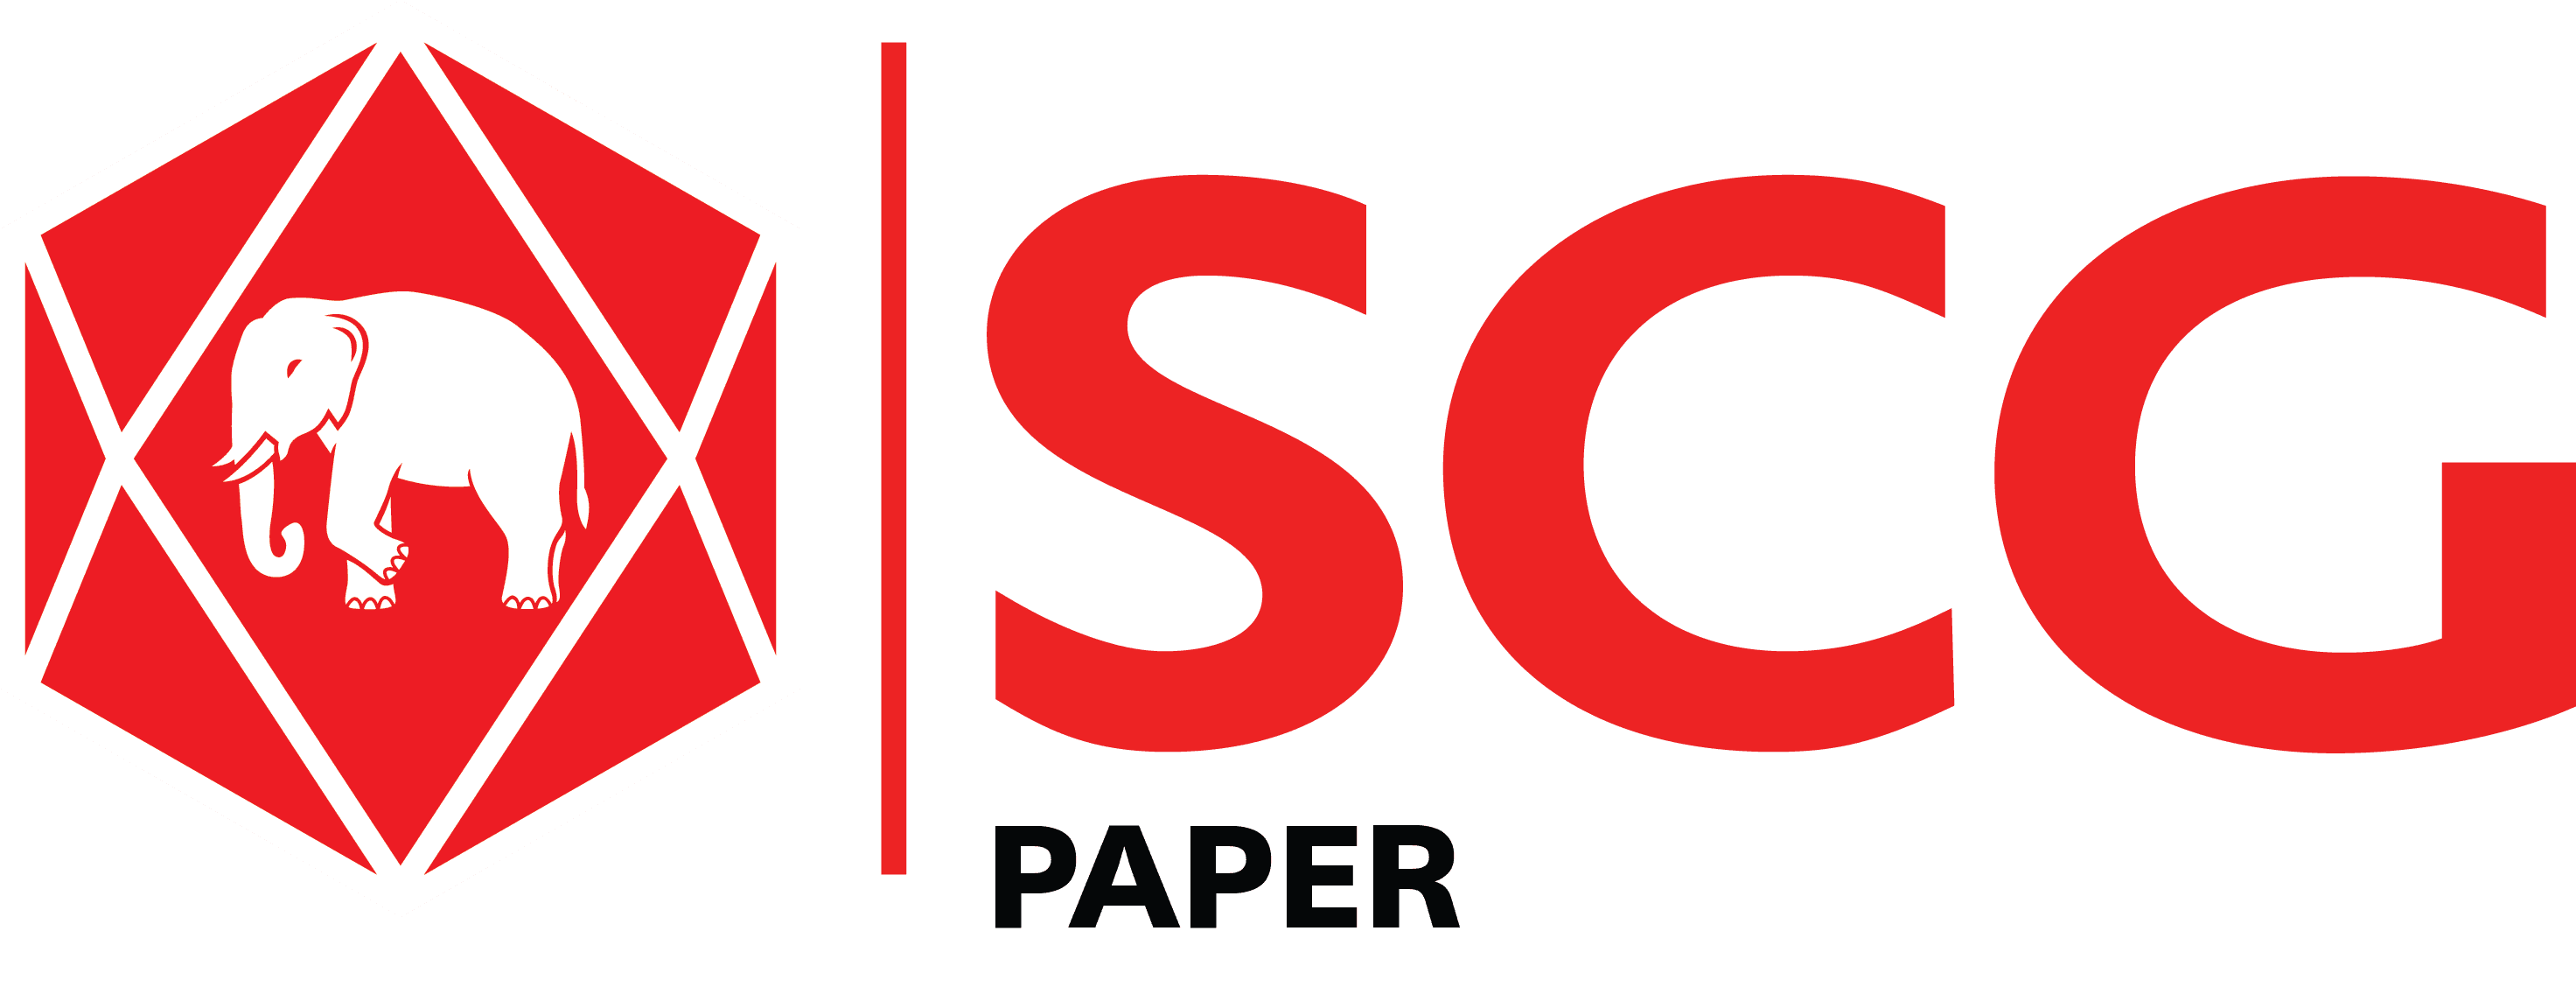 scg_paper_logo